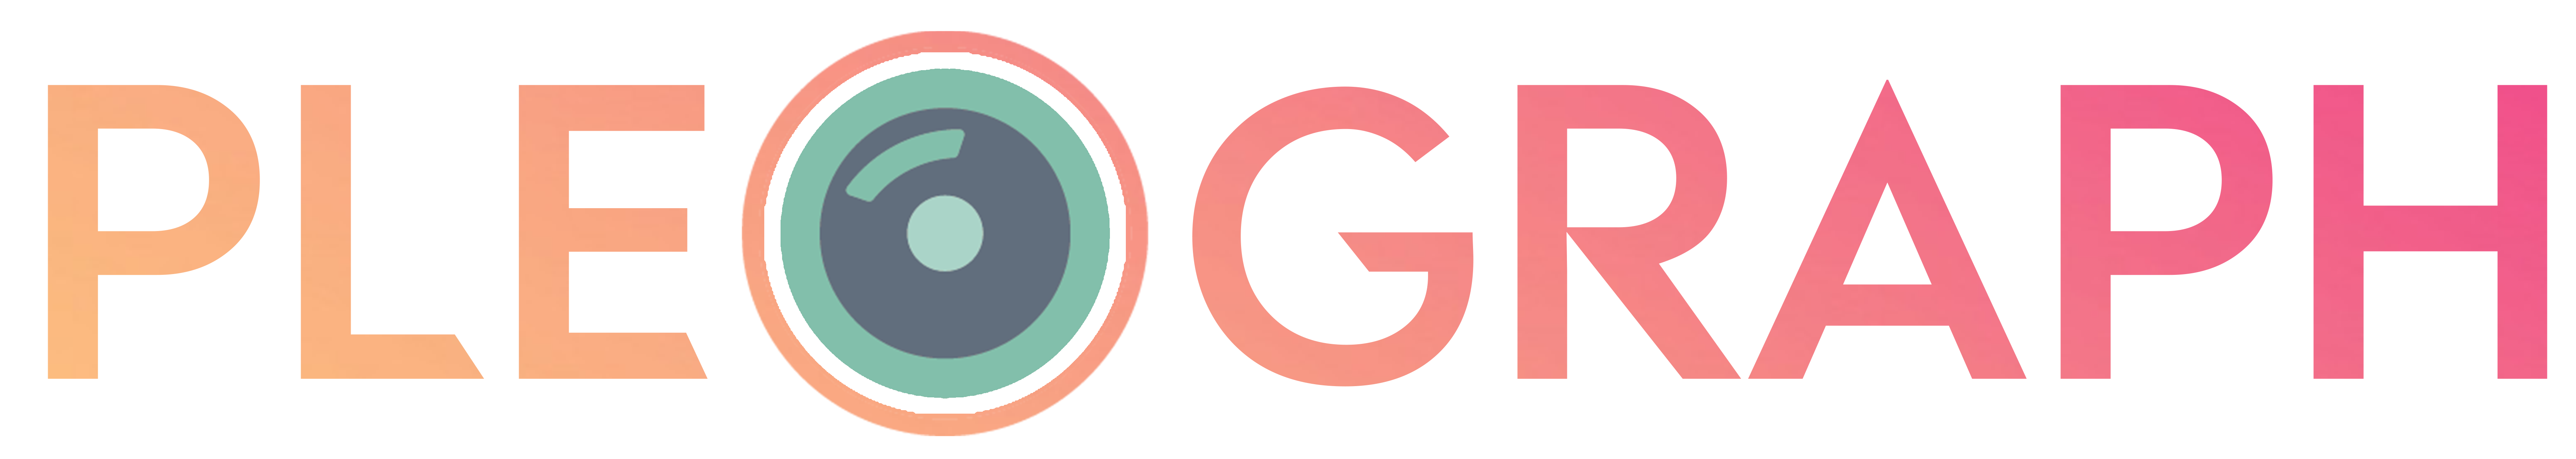 Pleograph logo design